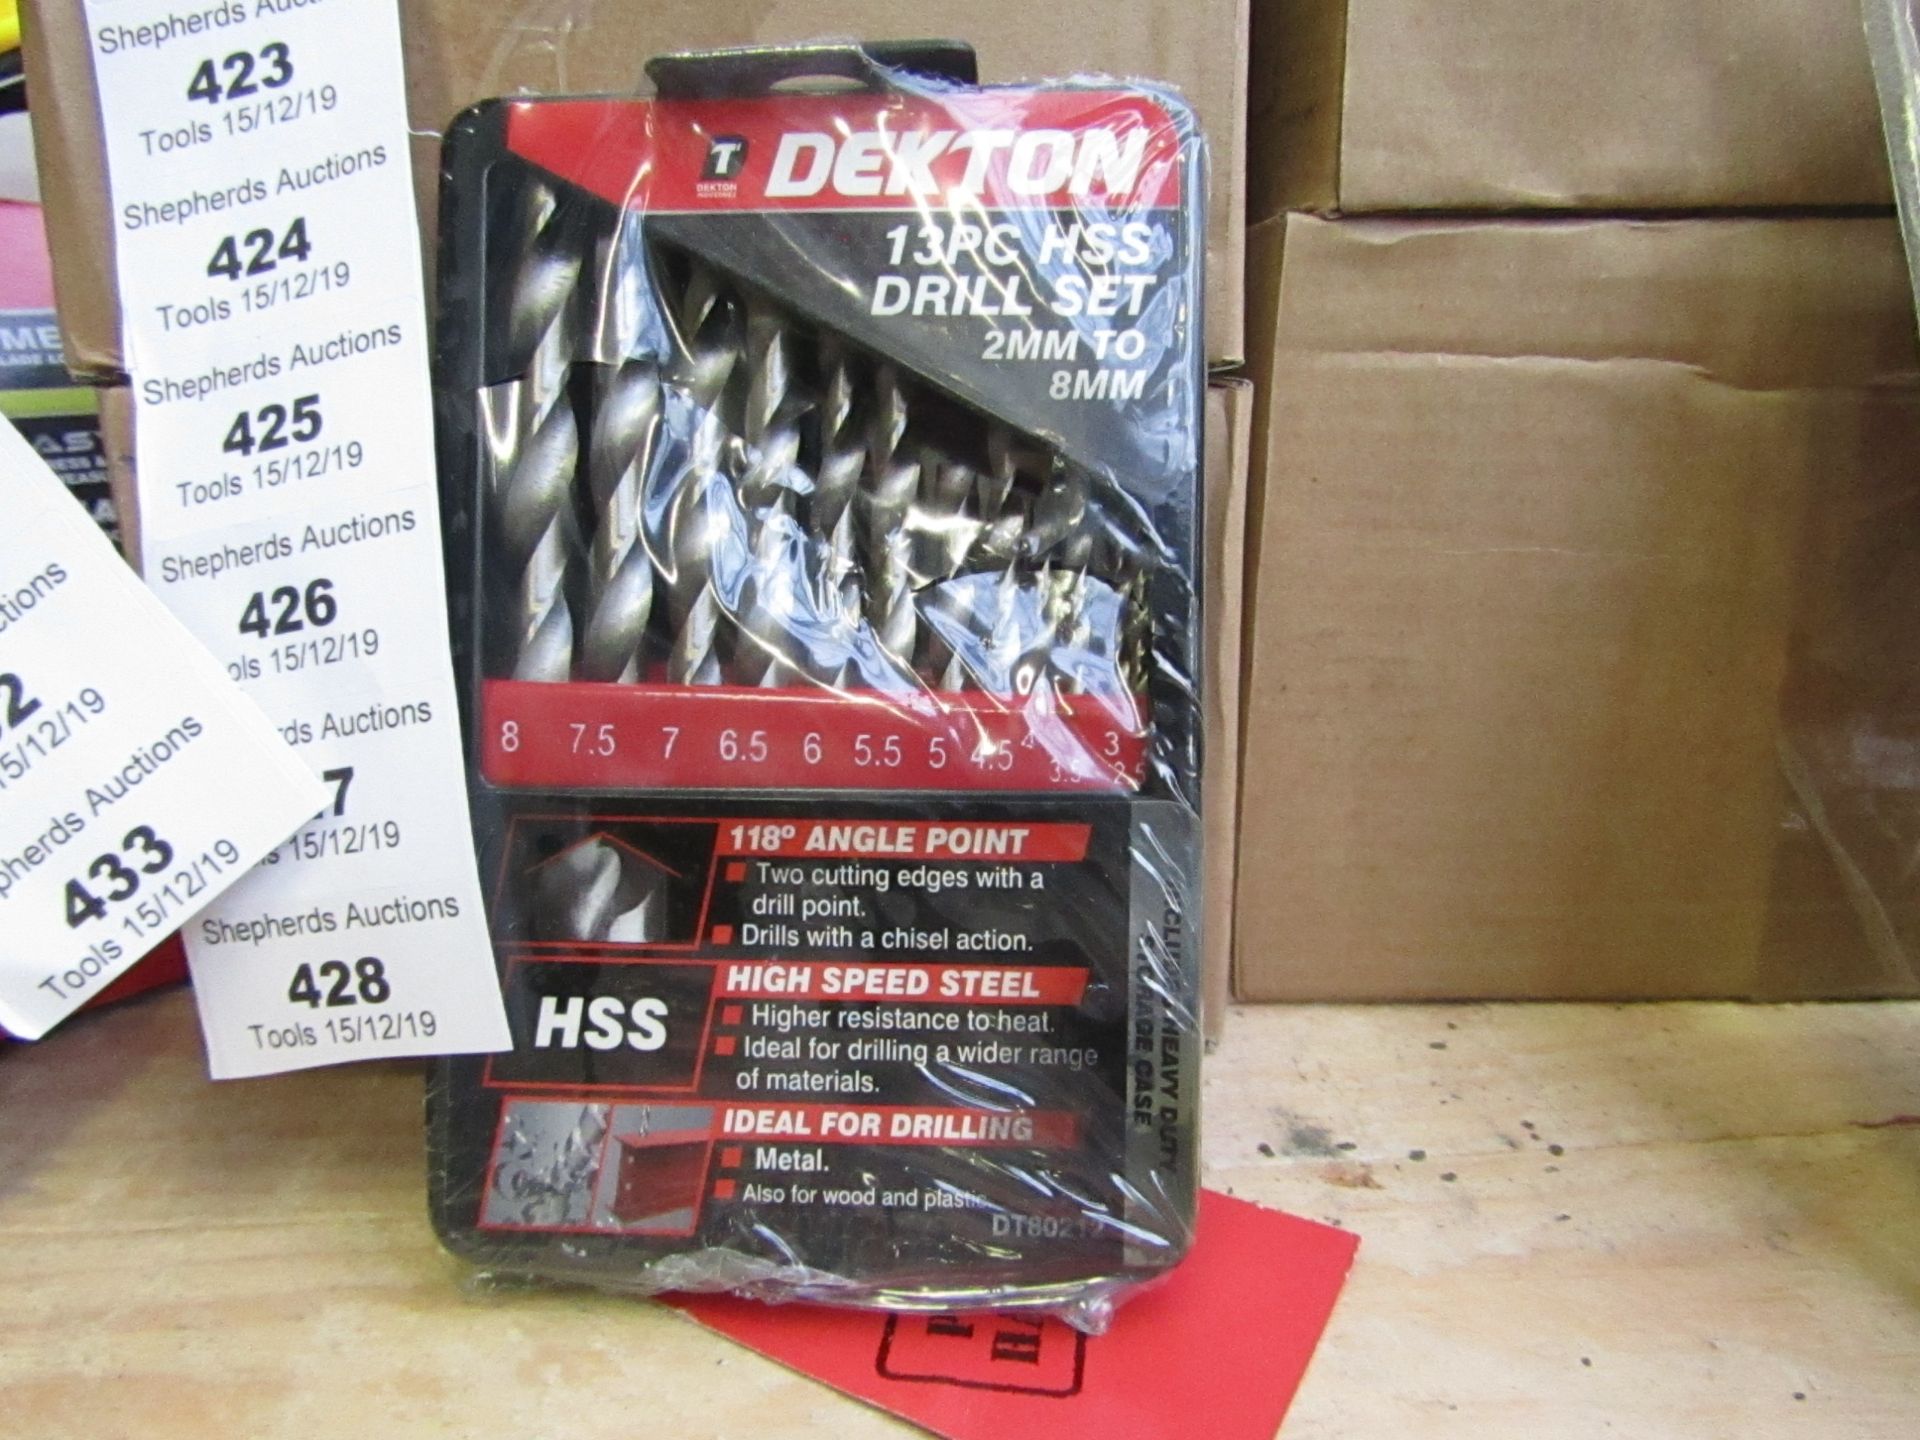 Dekton 13 piece HSS drill bit set, new in carry case.